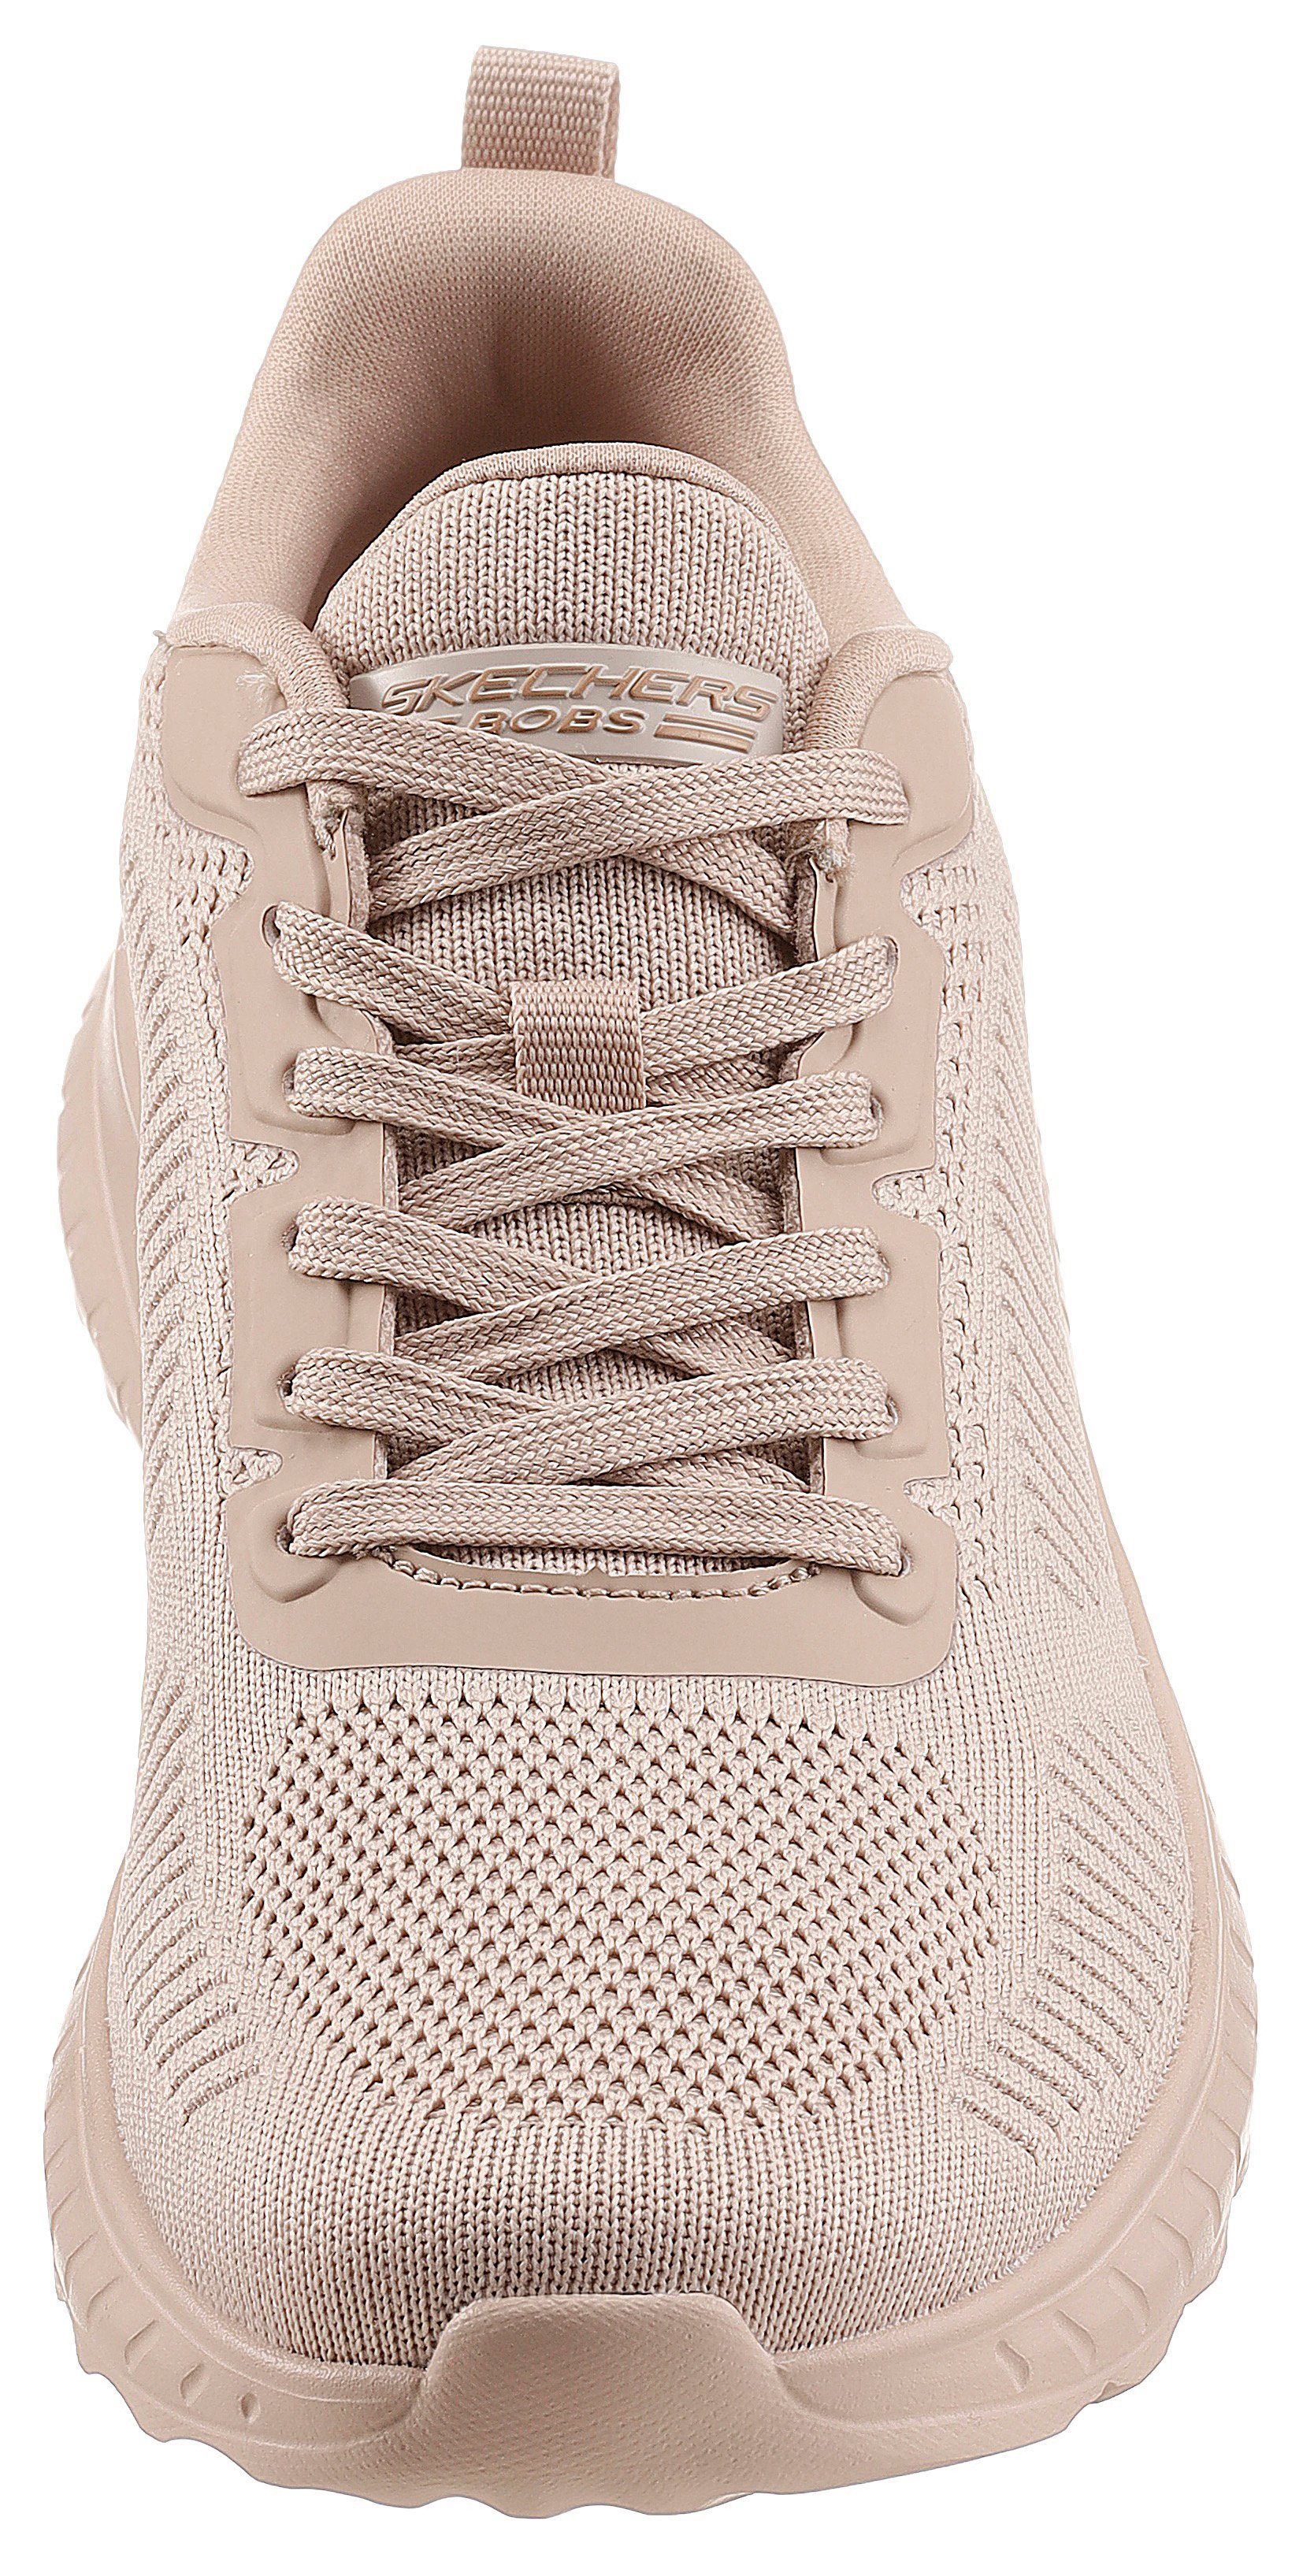 BOBS beige OFF SQUAD FACE komfortabler mit Sneaker Innensohle Skechers CHAOS